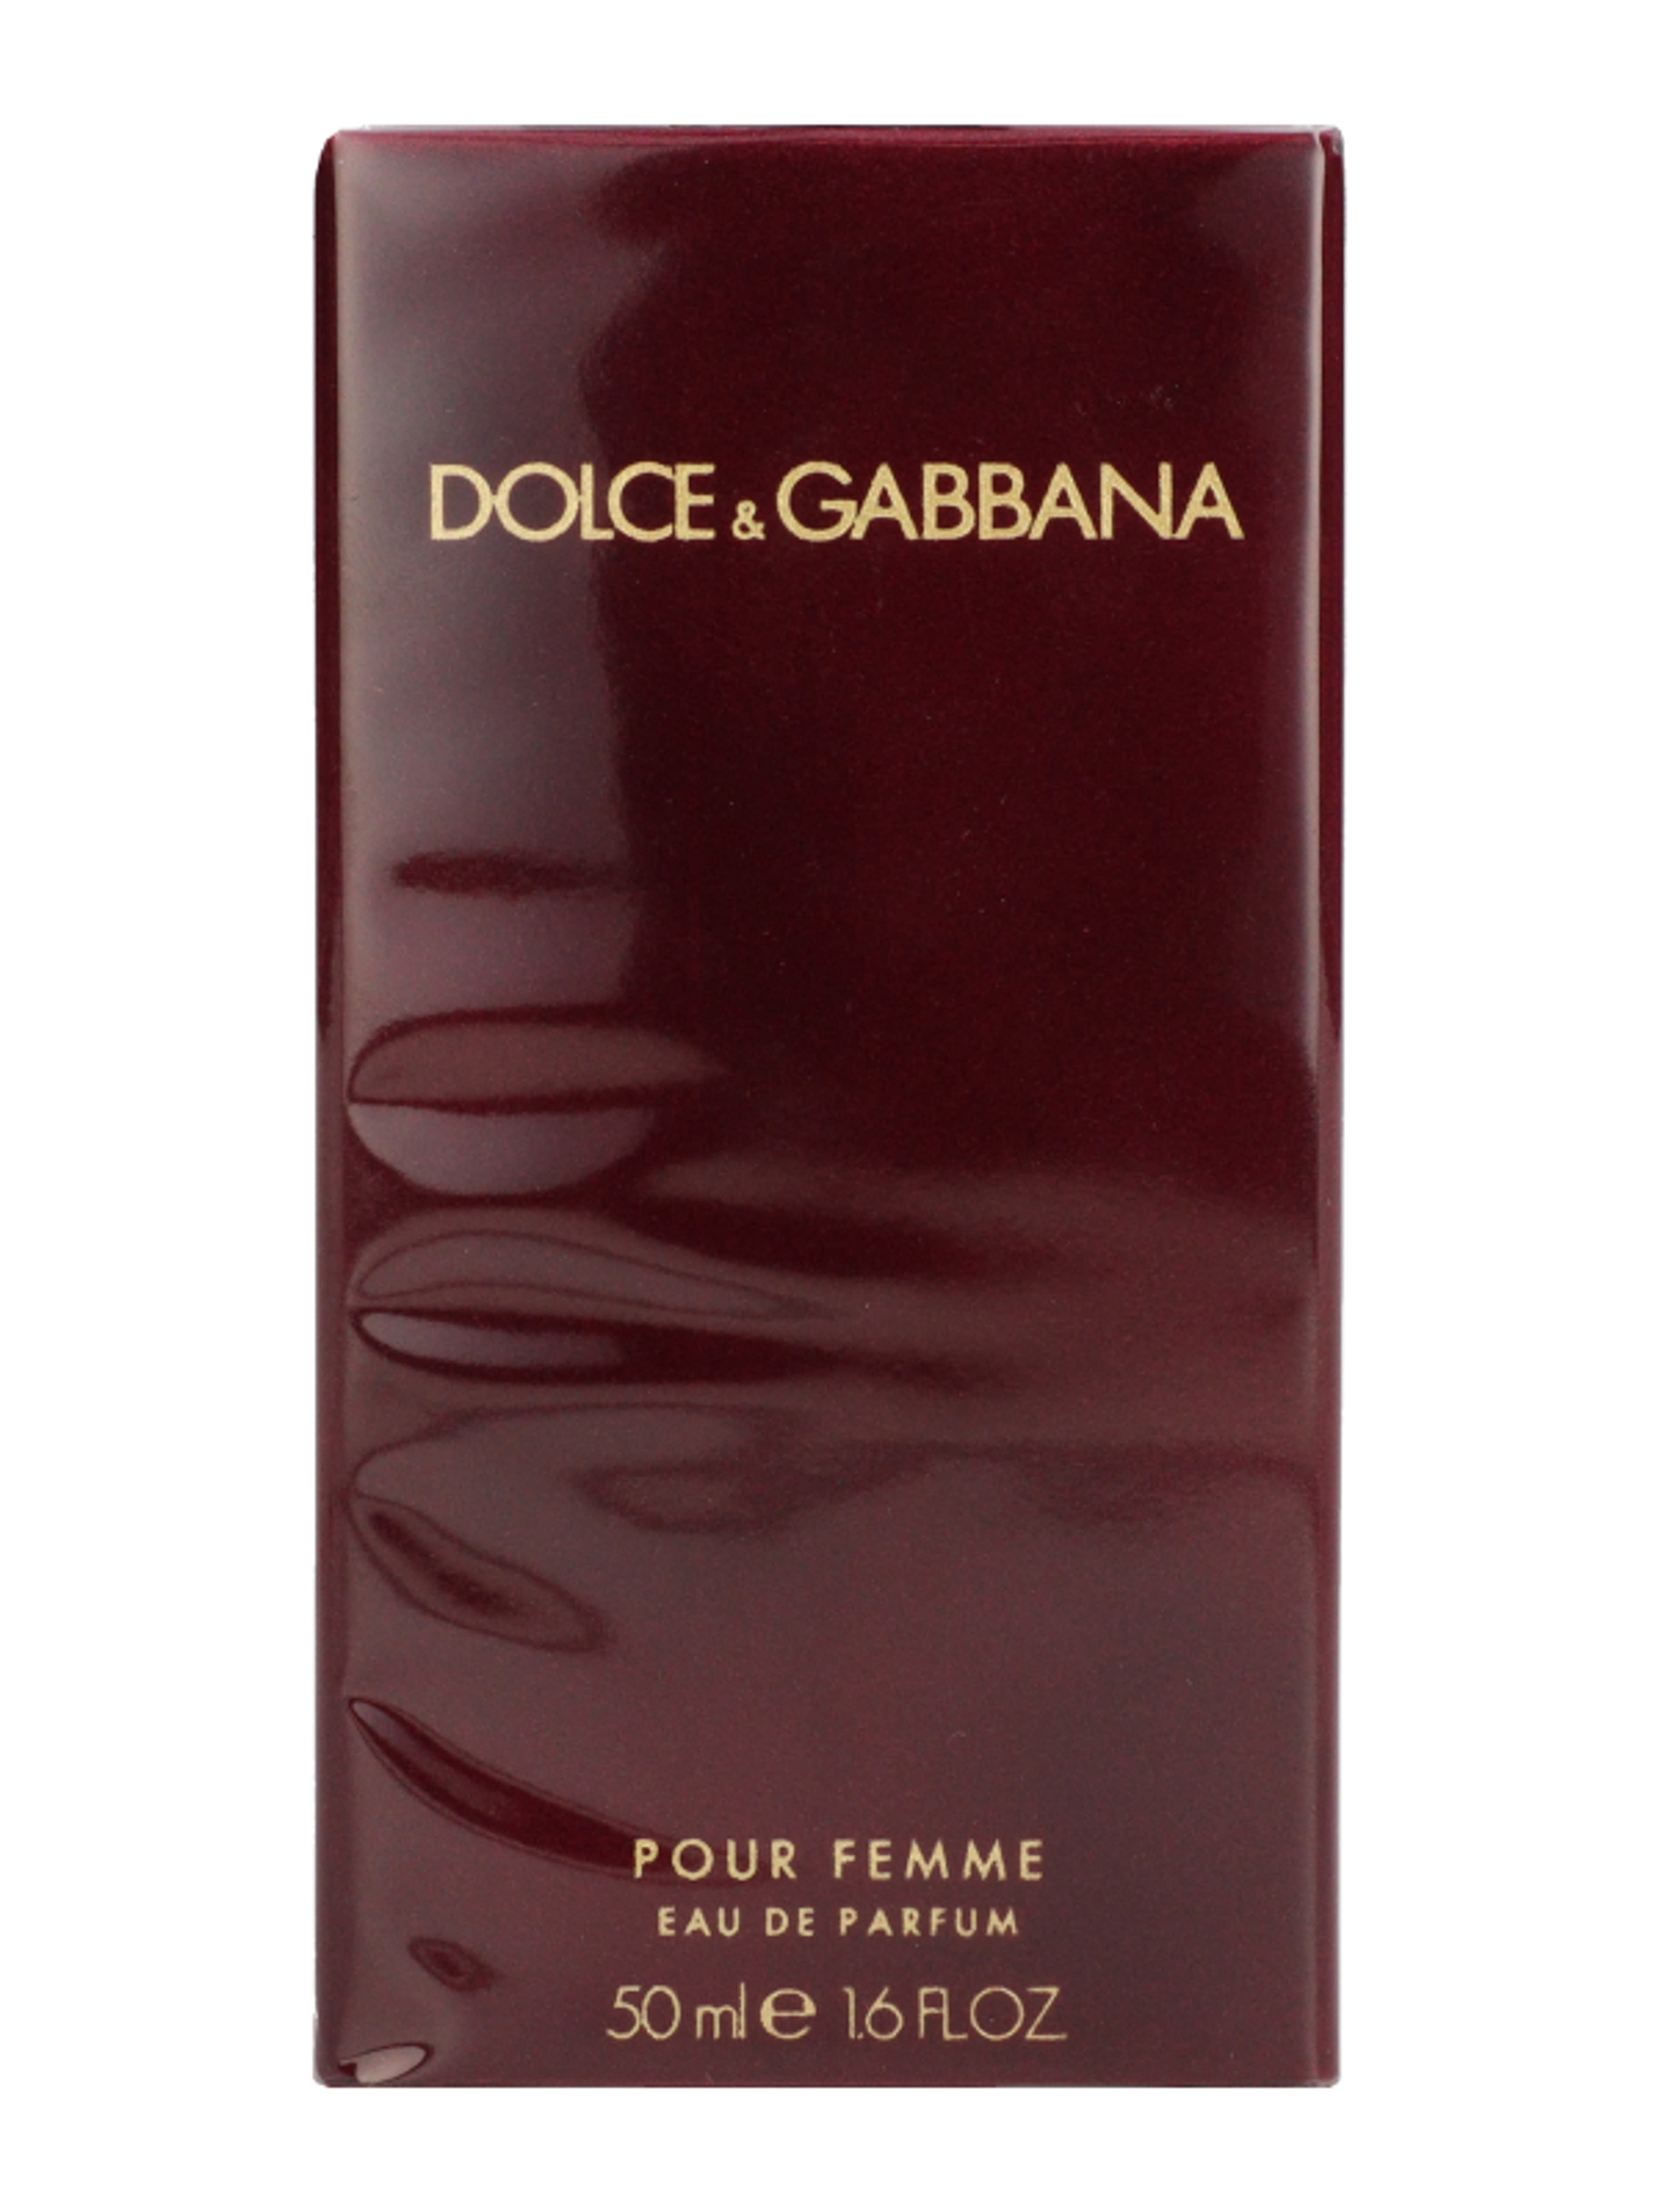 Dolce&Gabbana Pour Femme női eau de perfume - 50 ml-1